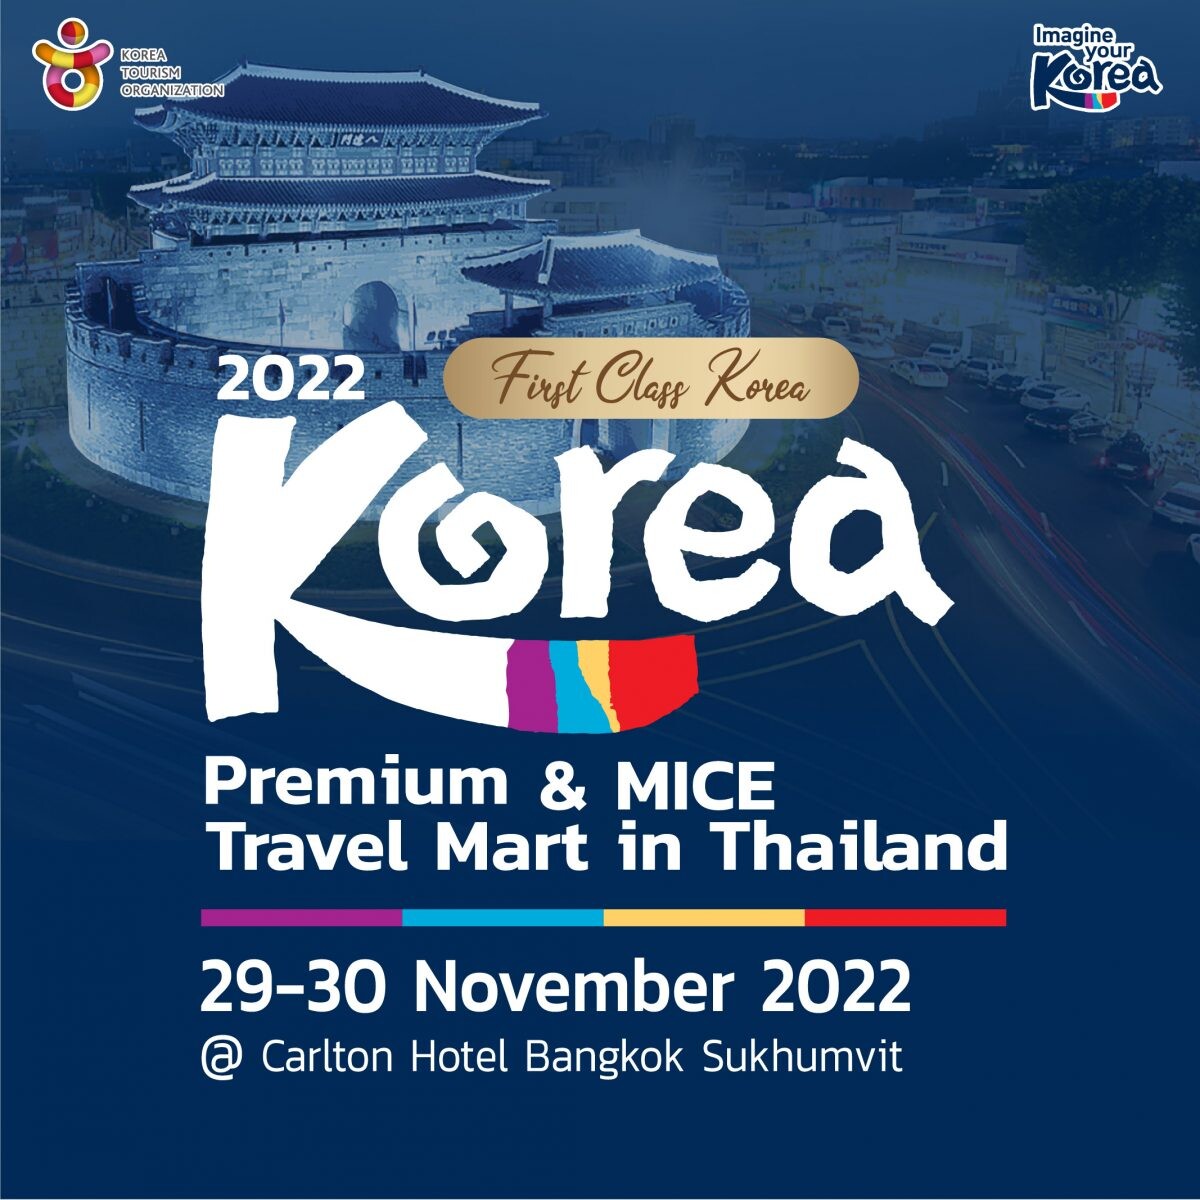 KTO จัดงาน "Premium & MICE Travel Mart in Thailand 2022-First Class Korea" 29-30 พฤศจิกายนนี้ ณ โรงแรมคาร์ลตัน กรุงเทพฯ สุขุมวิท